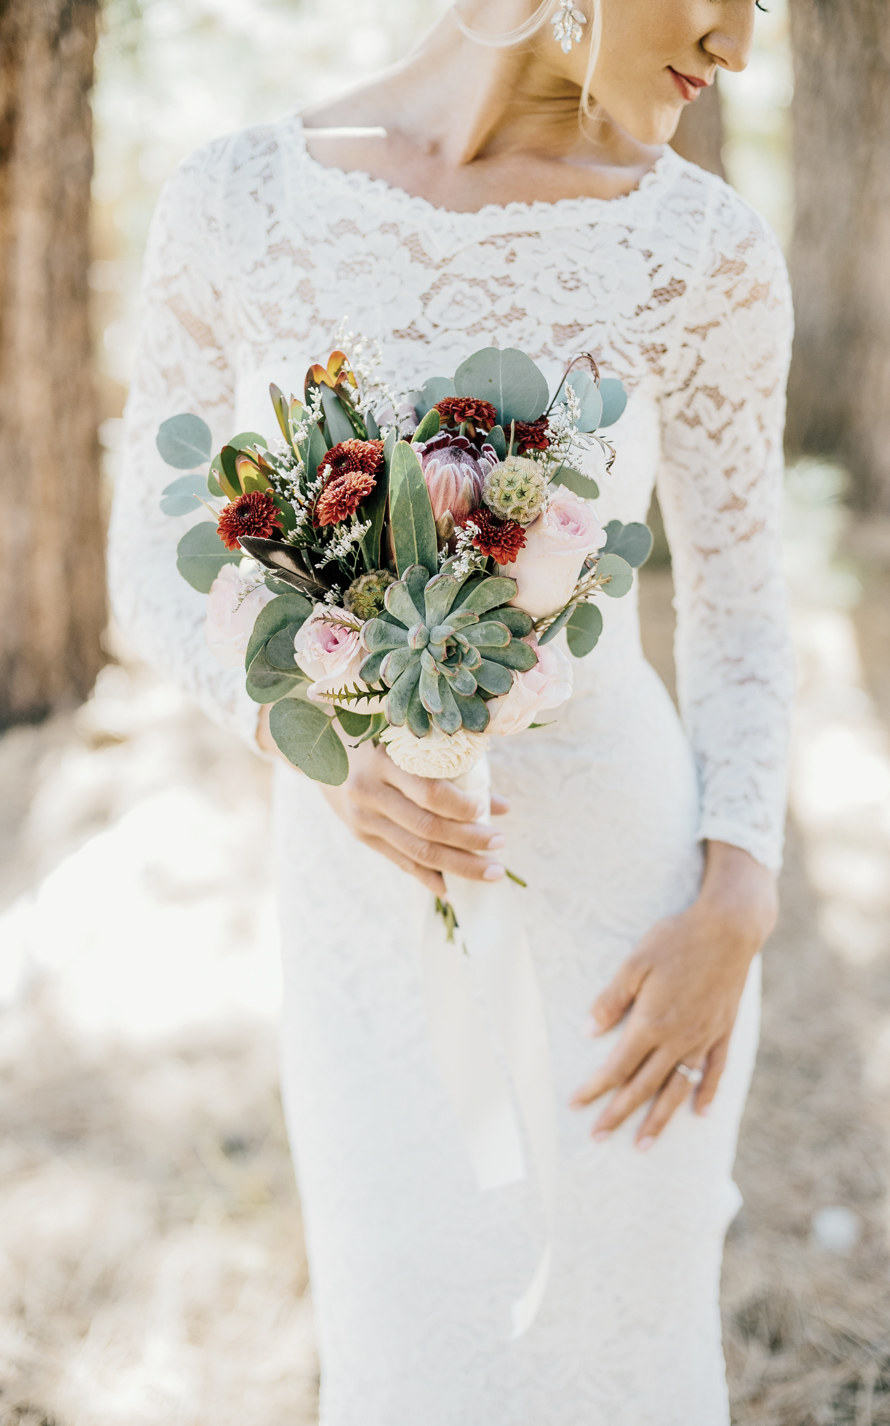 online wedding florist